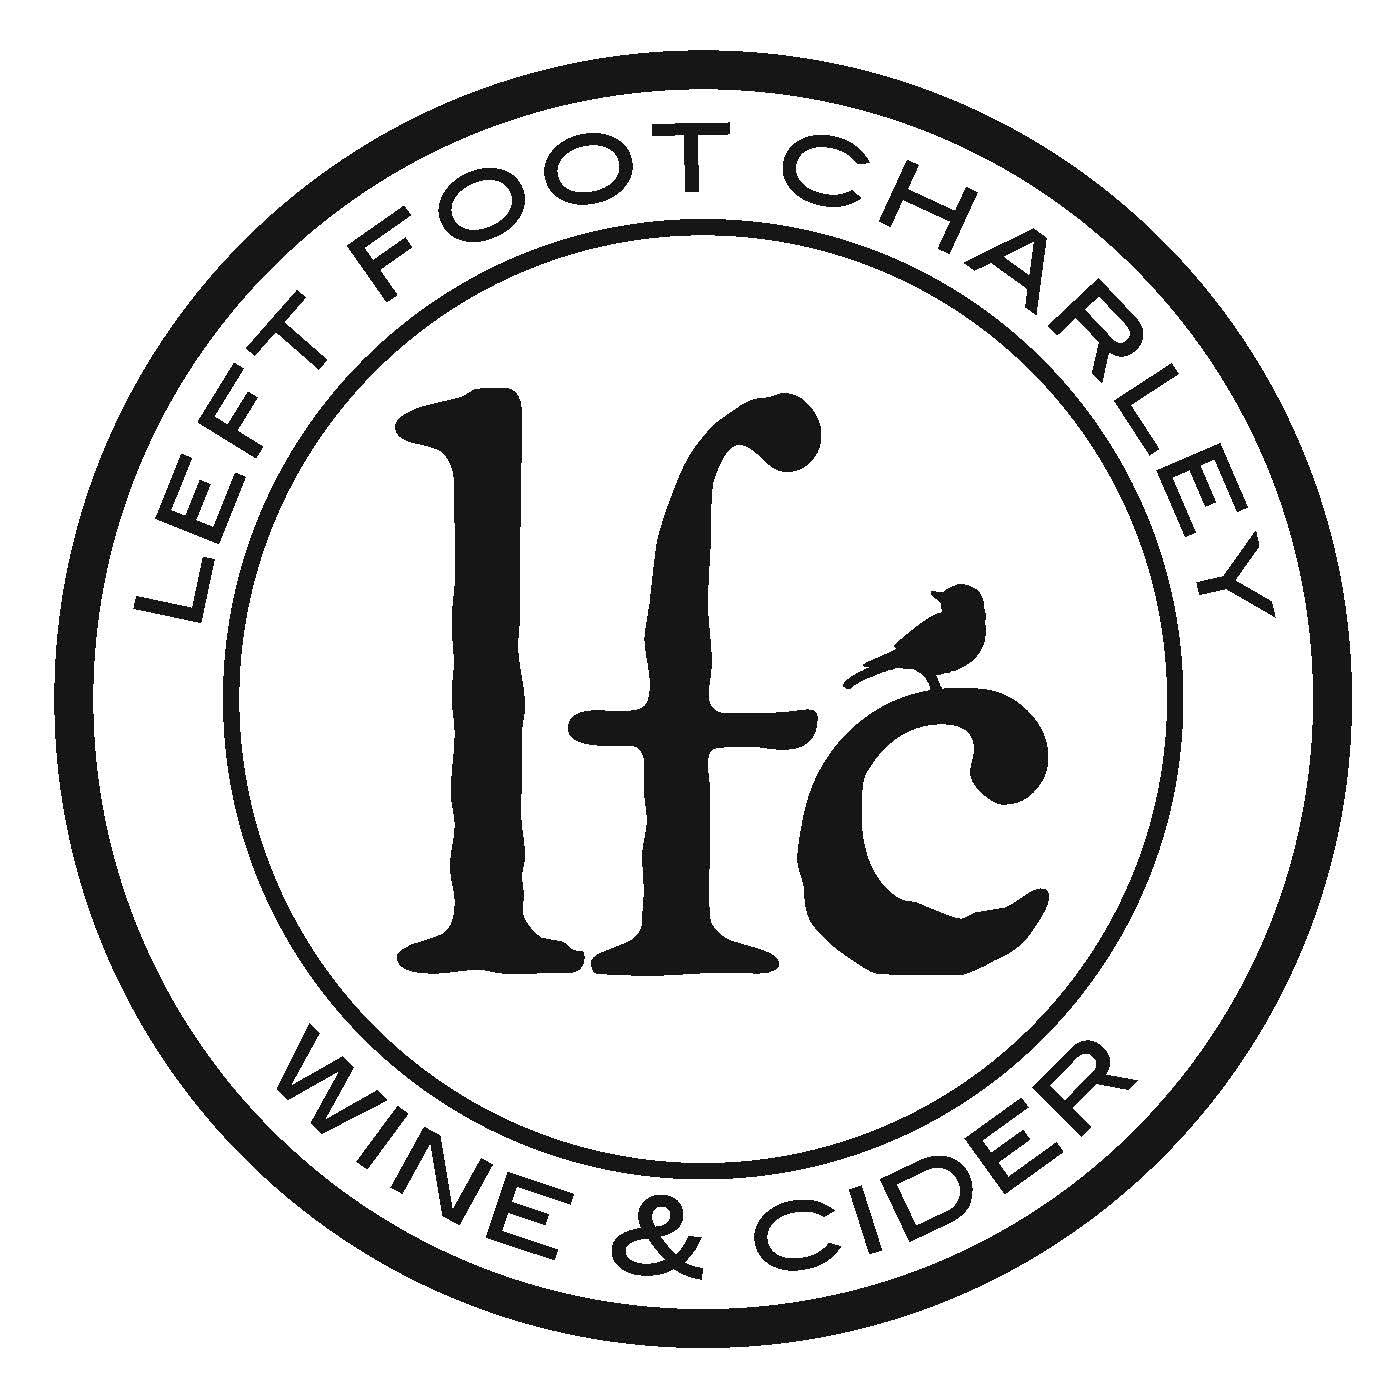 Left Foot Charley logo